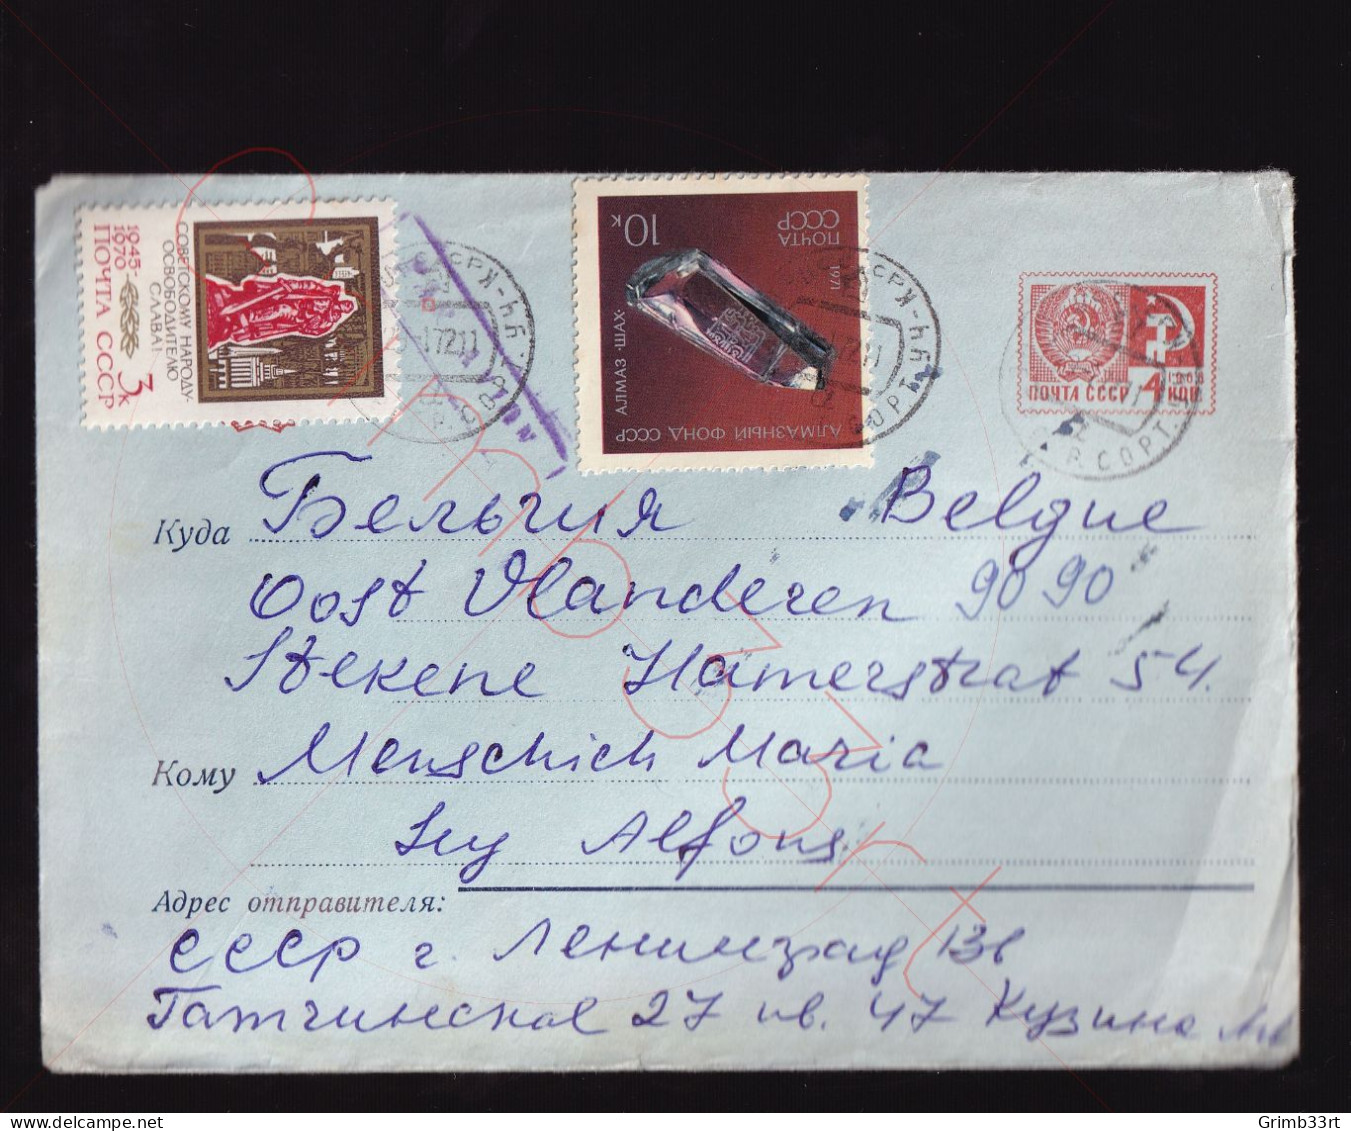 CCCP - Briefomslag Van Luchthaven Rusland Naar Stekene - PAR AVION - 23 Januari 1971 - Briefe U. Dokumente